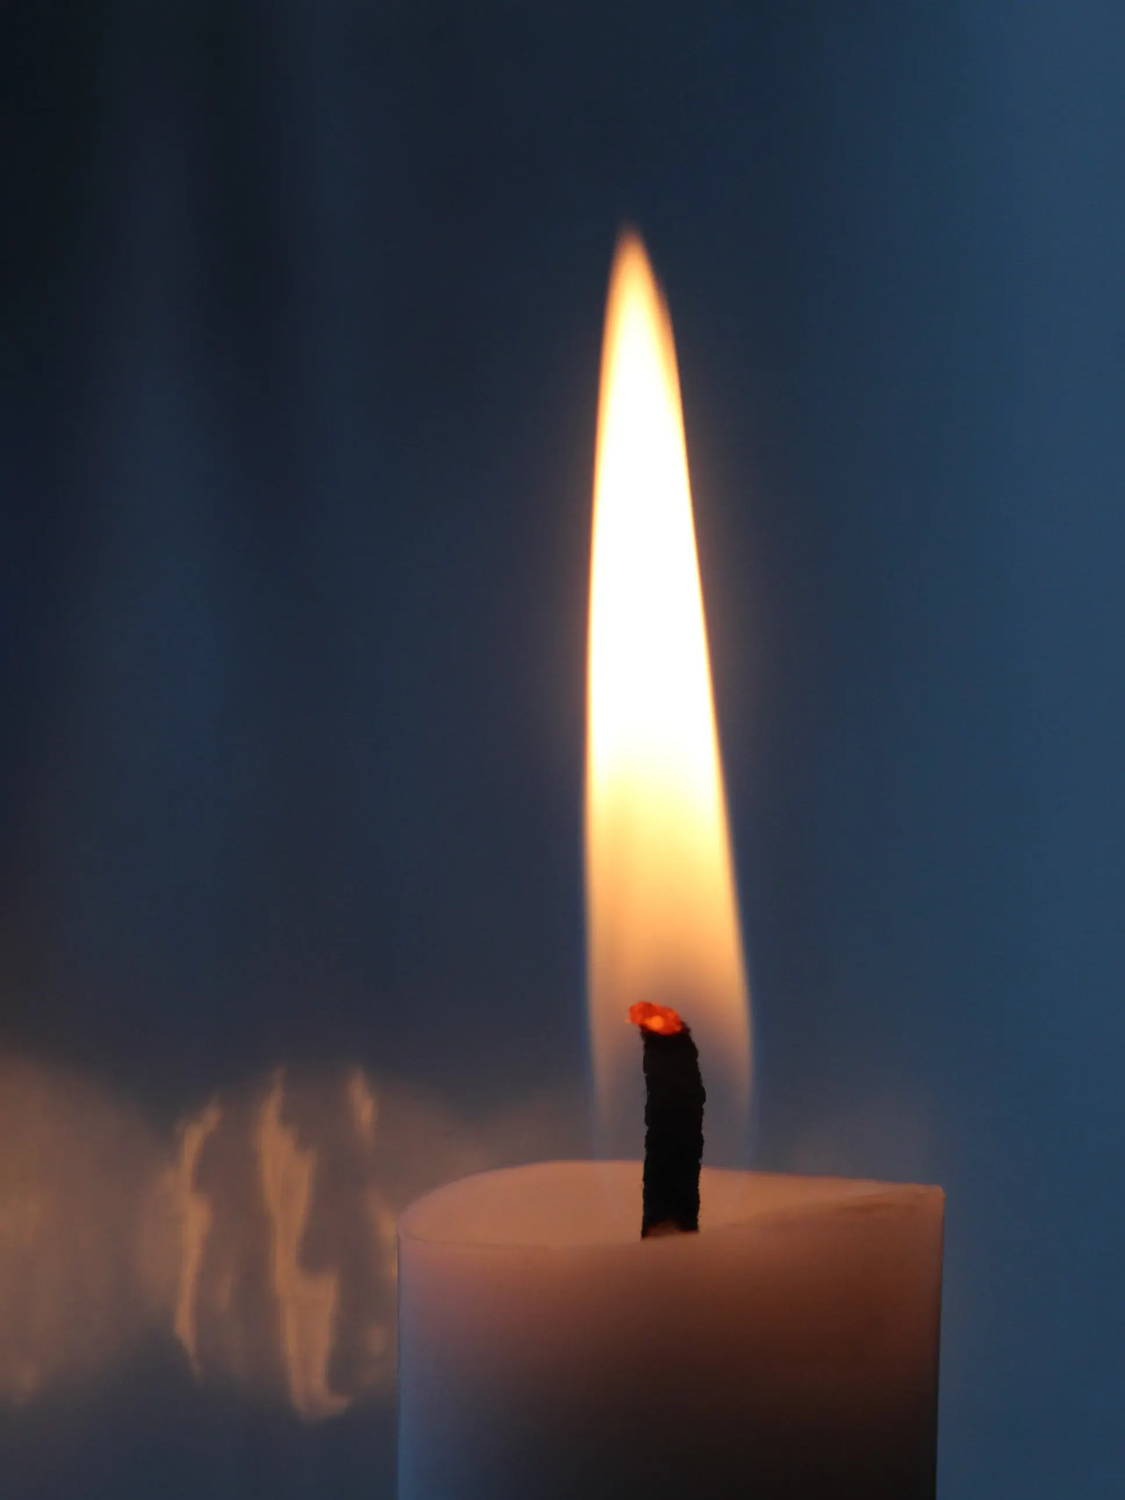 Closeup of a lit taper candle